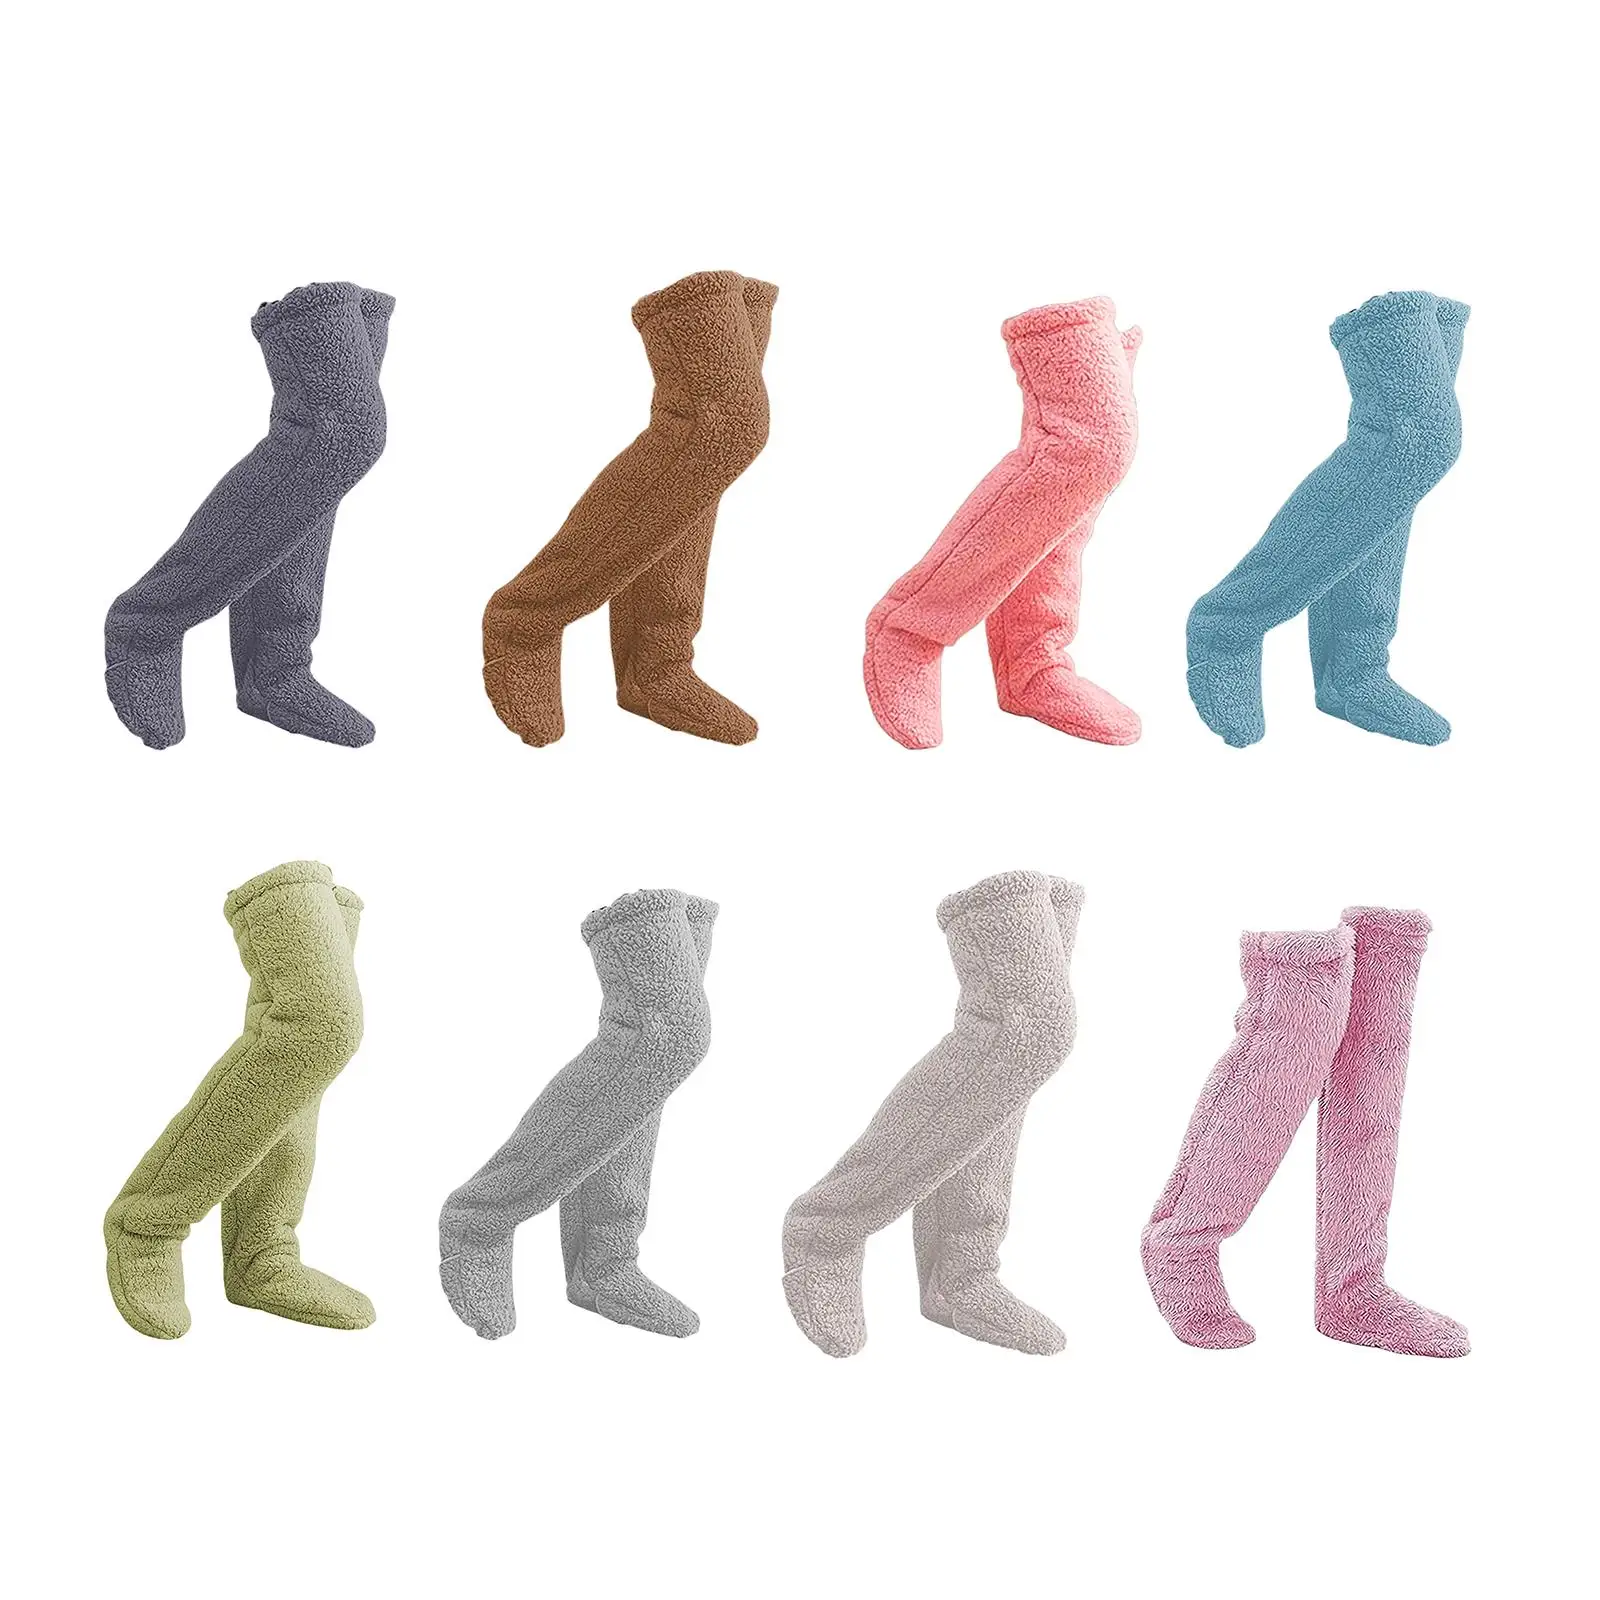 Thigh High Socks Warm Thick Foot Wrap Long Boot Stockings Plush Leg Warmers